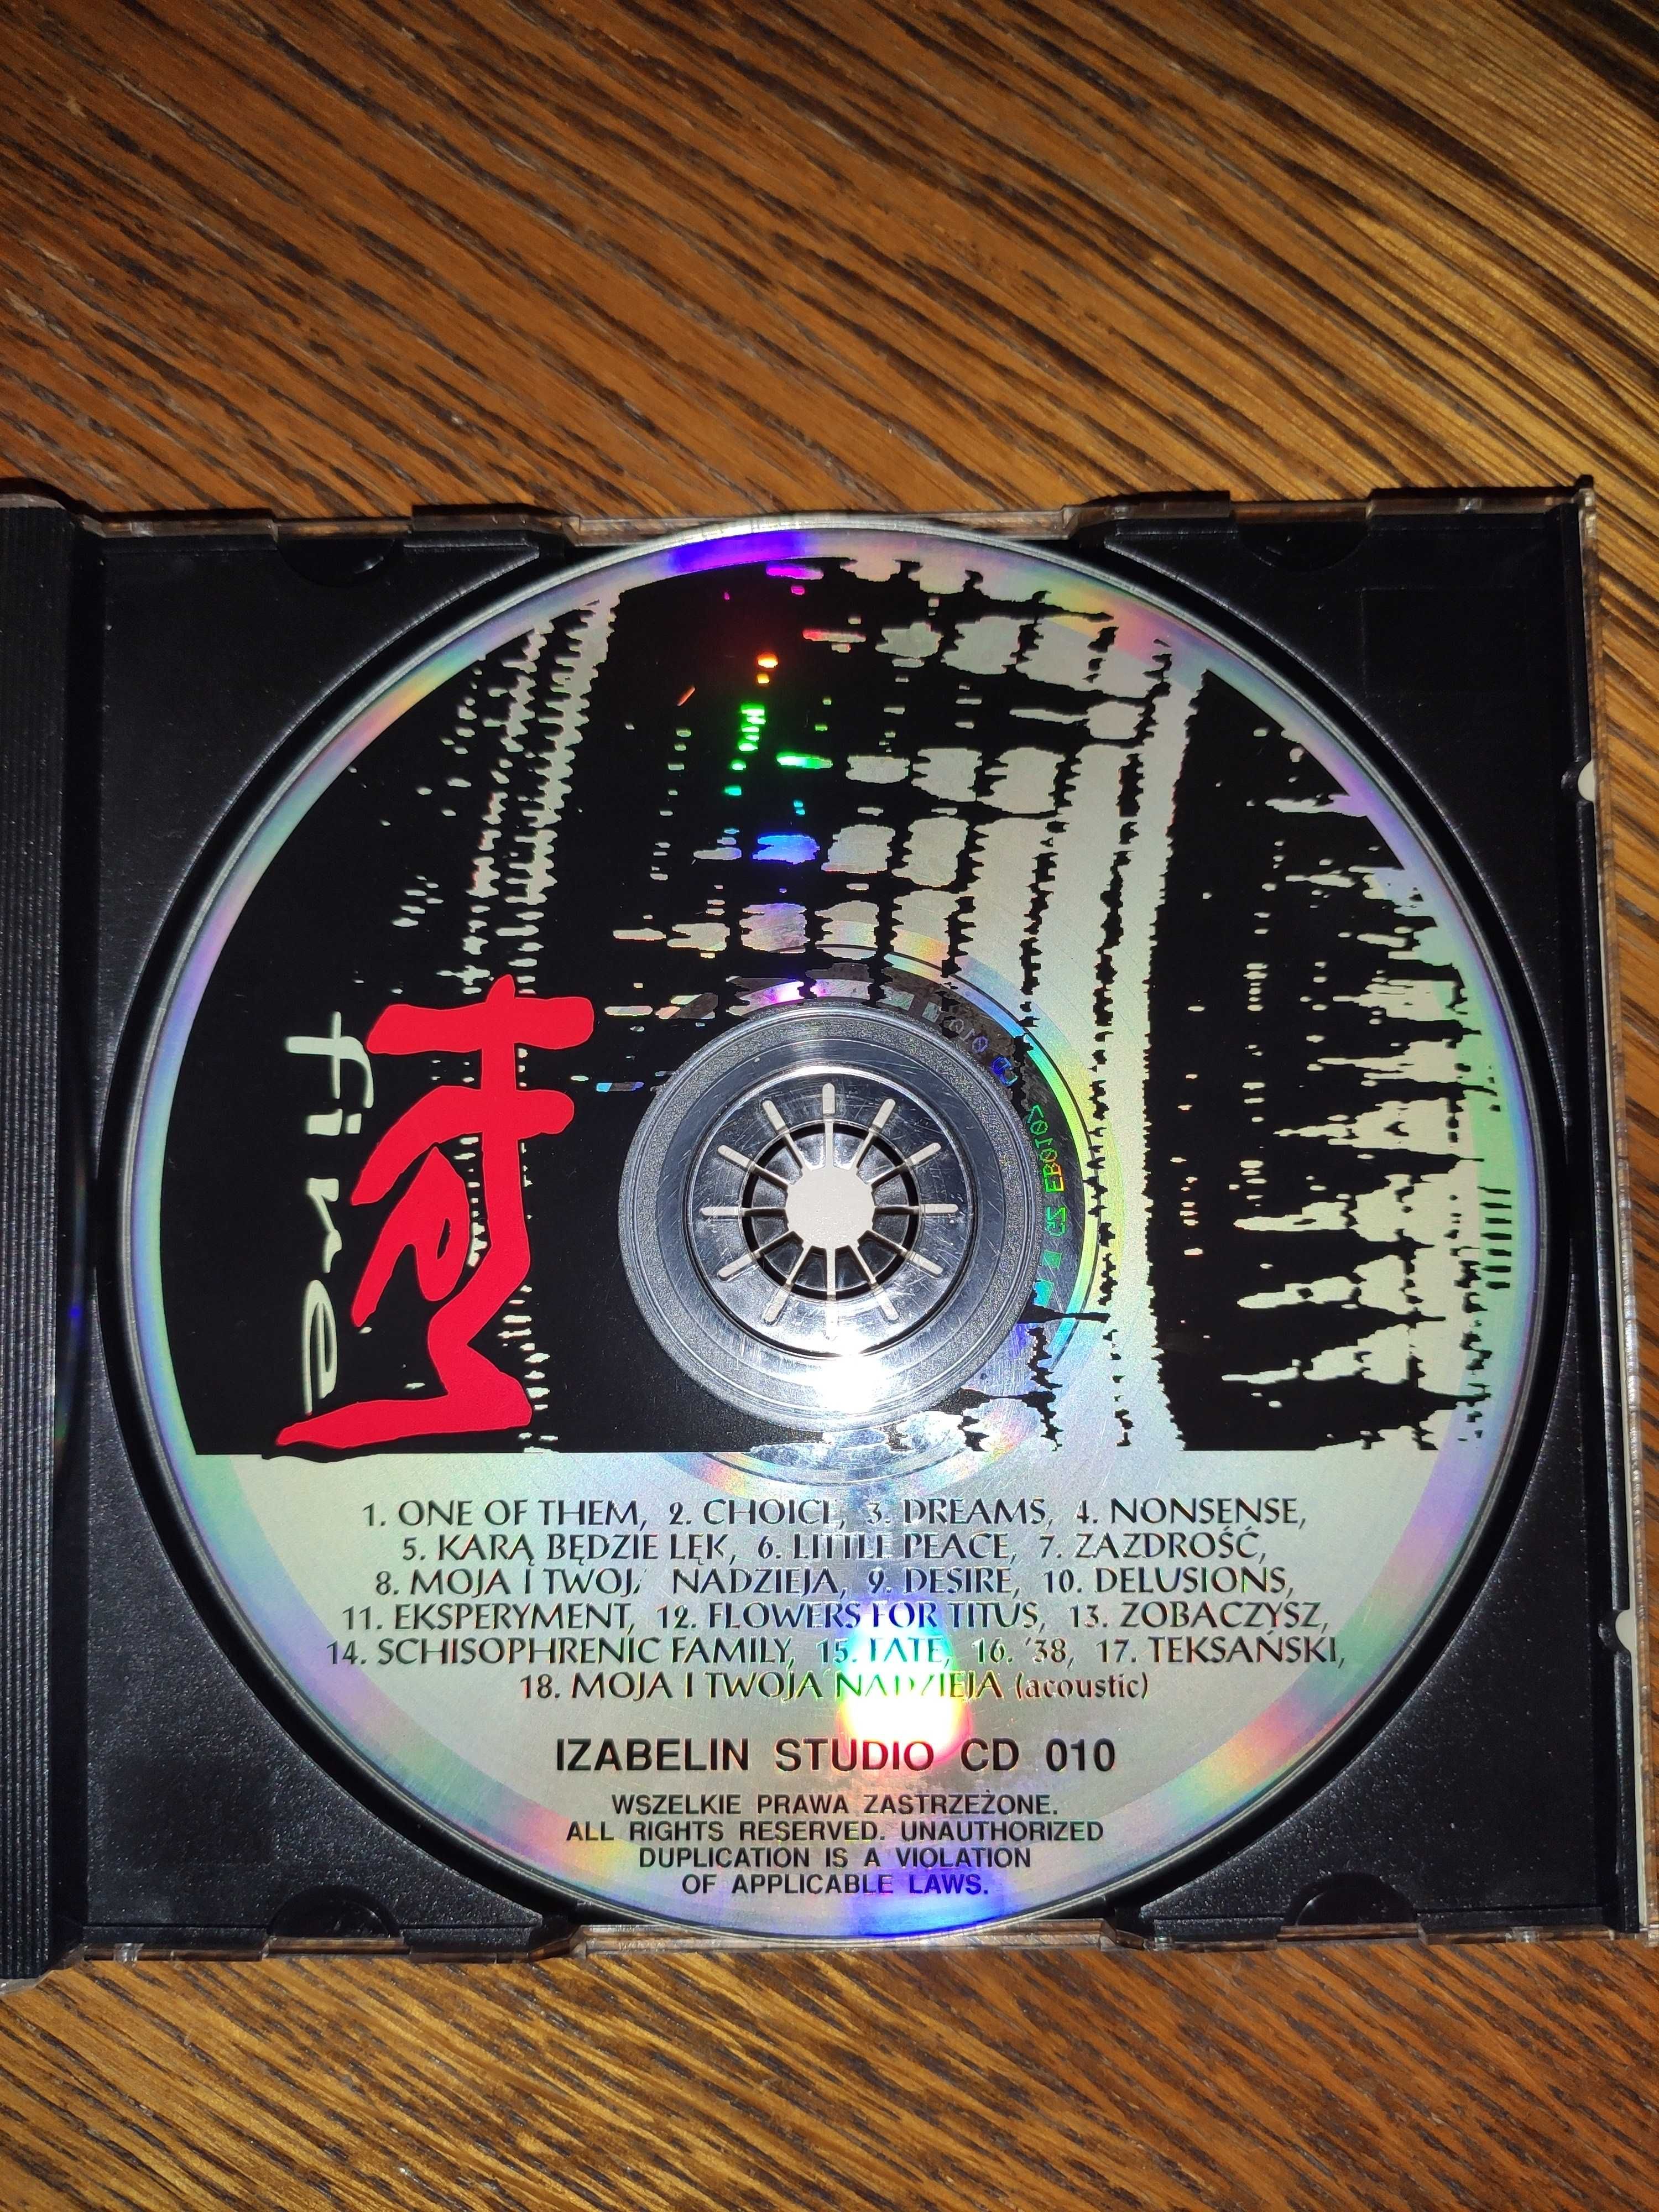 Hey - Fire, CD 1993, Izabelin, czerwone logo, Nosowska, Banach